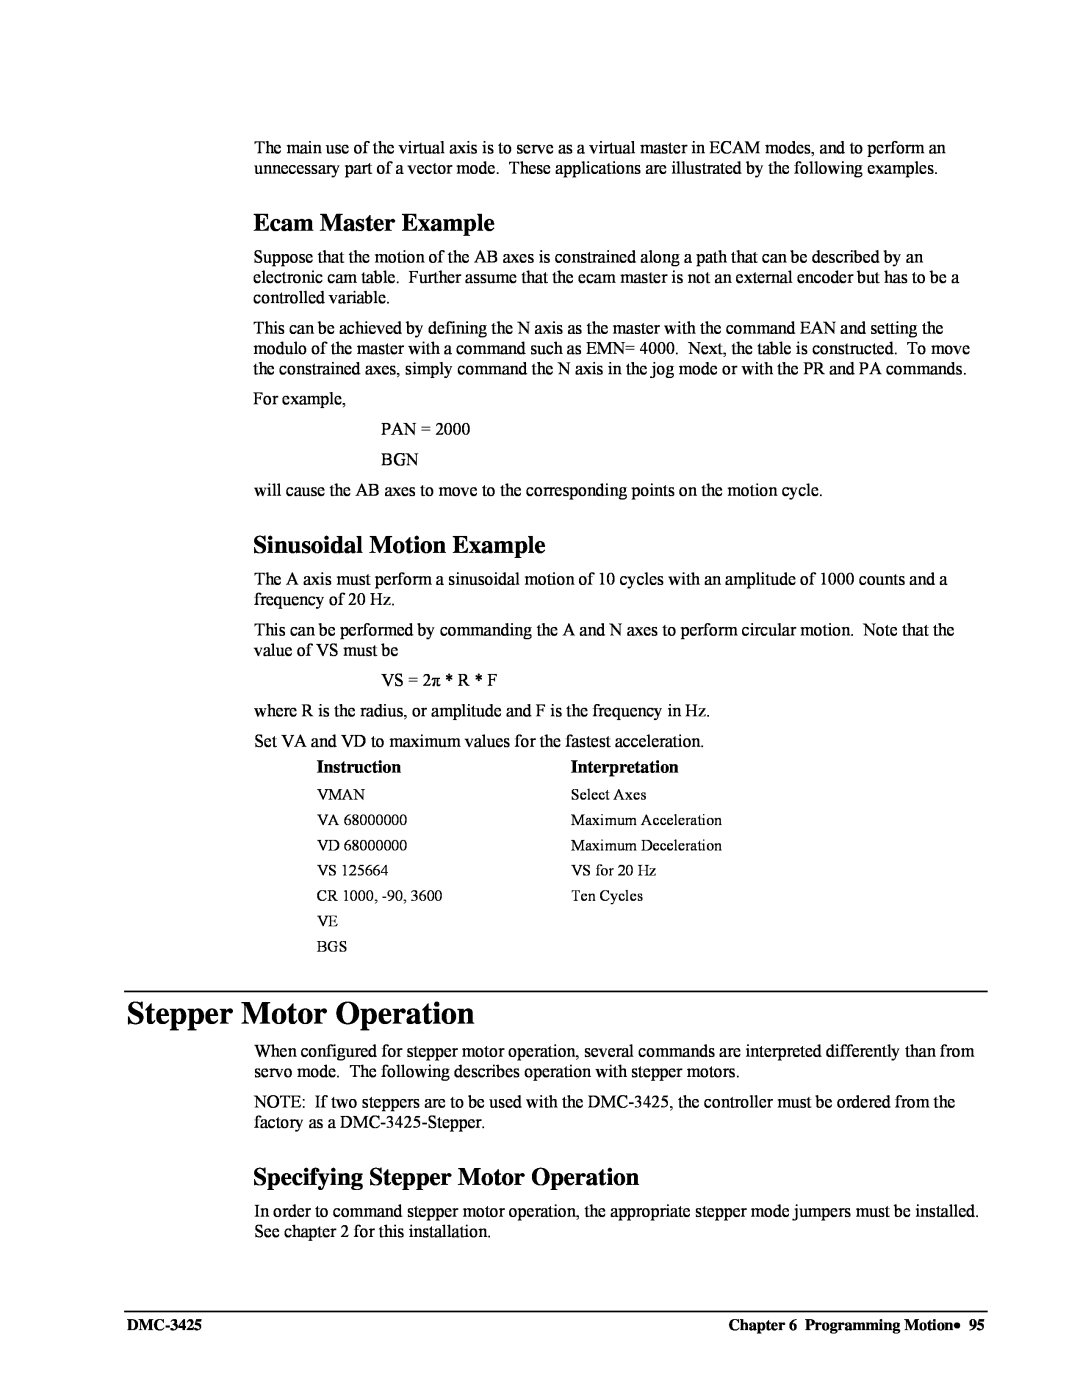 Galil DMC-3425 user manual Ecam Master Example, Sinusoidal Motion Example, Specifying Stepper Motor Operation 